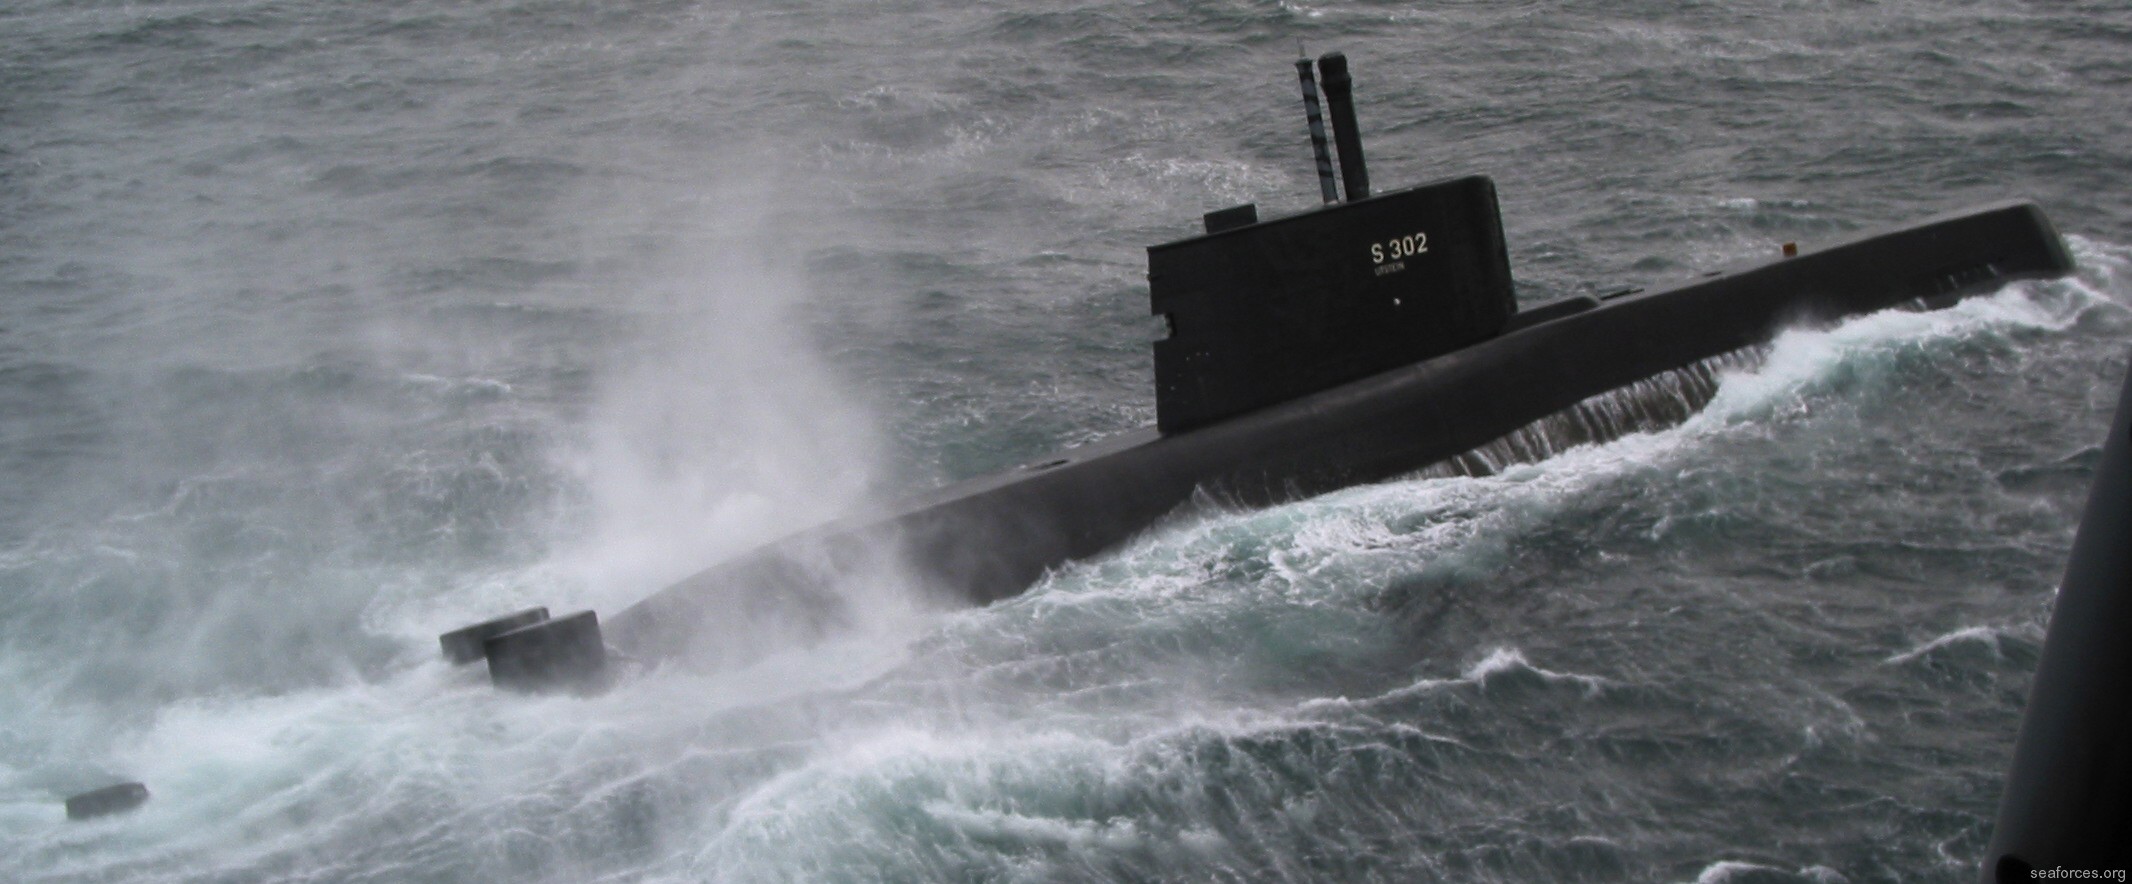 s-302 hnoms knm utstein ula class submarine type 210 attack ssk undervannsbåt royal norwegian navy sjøforsvaret 06